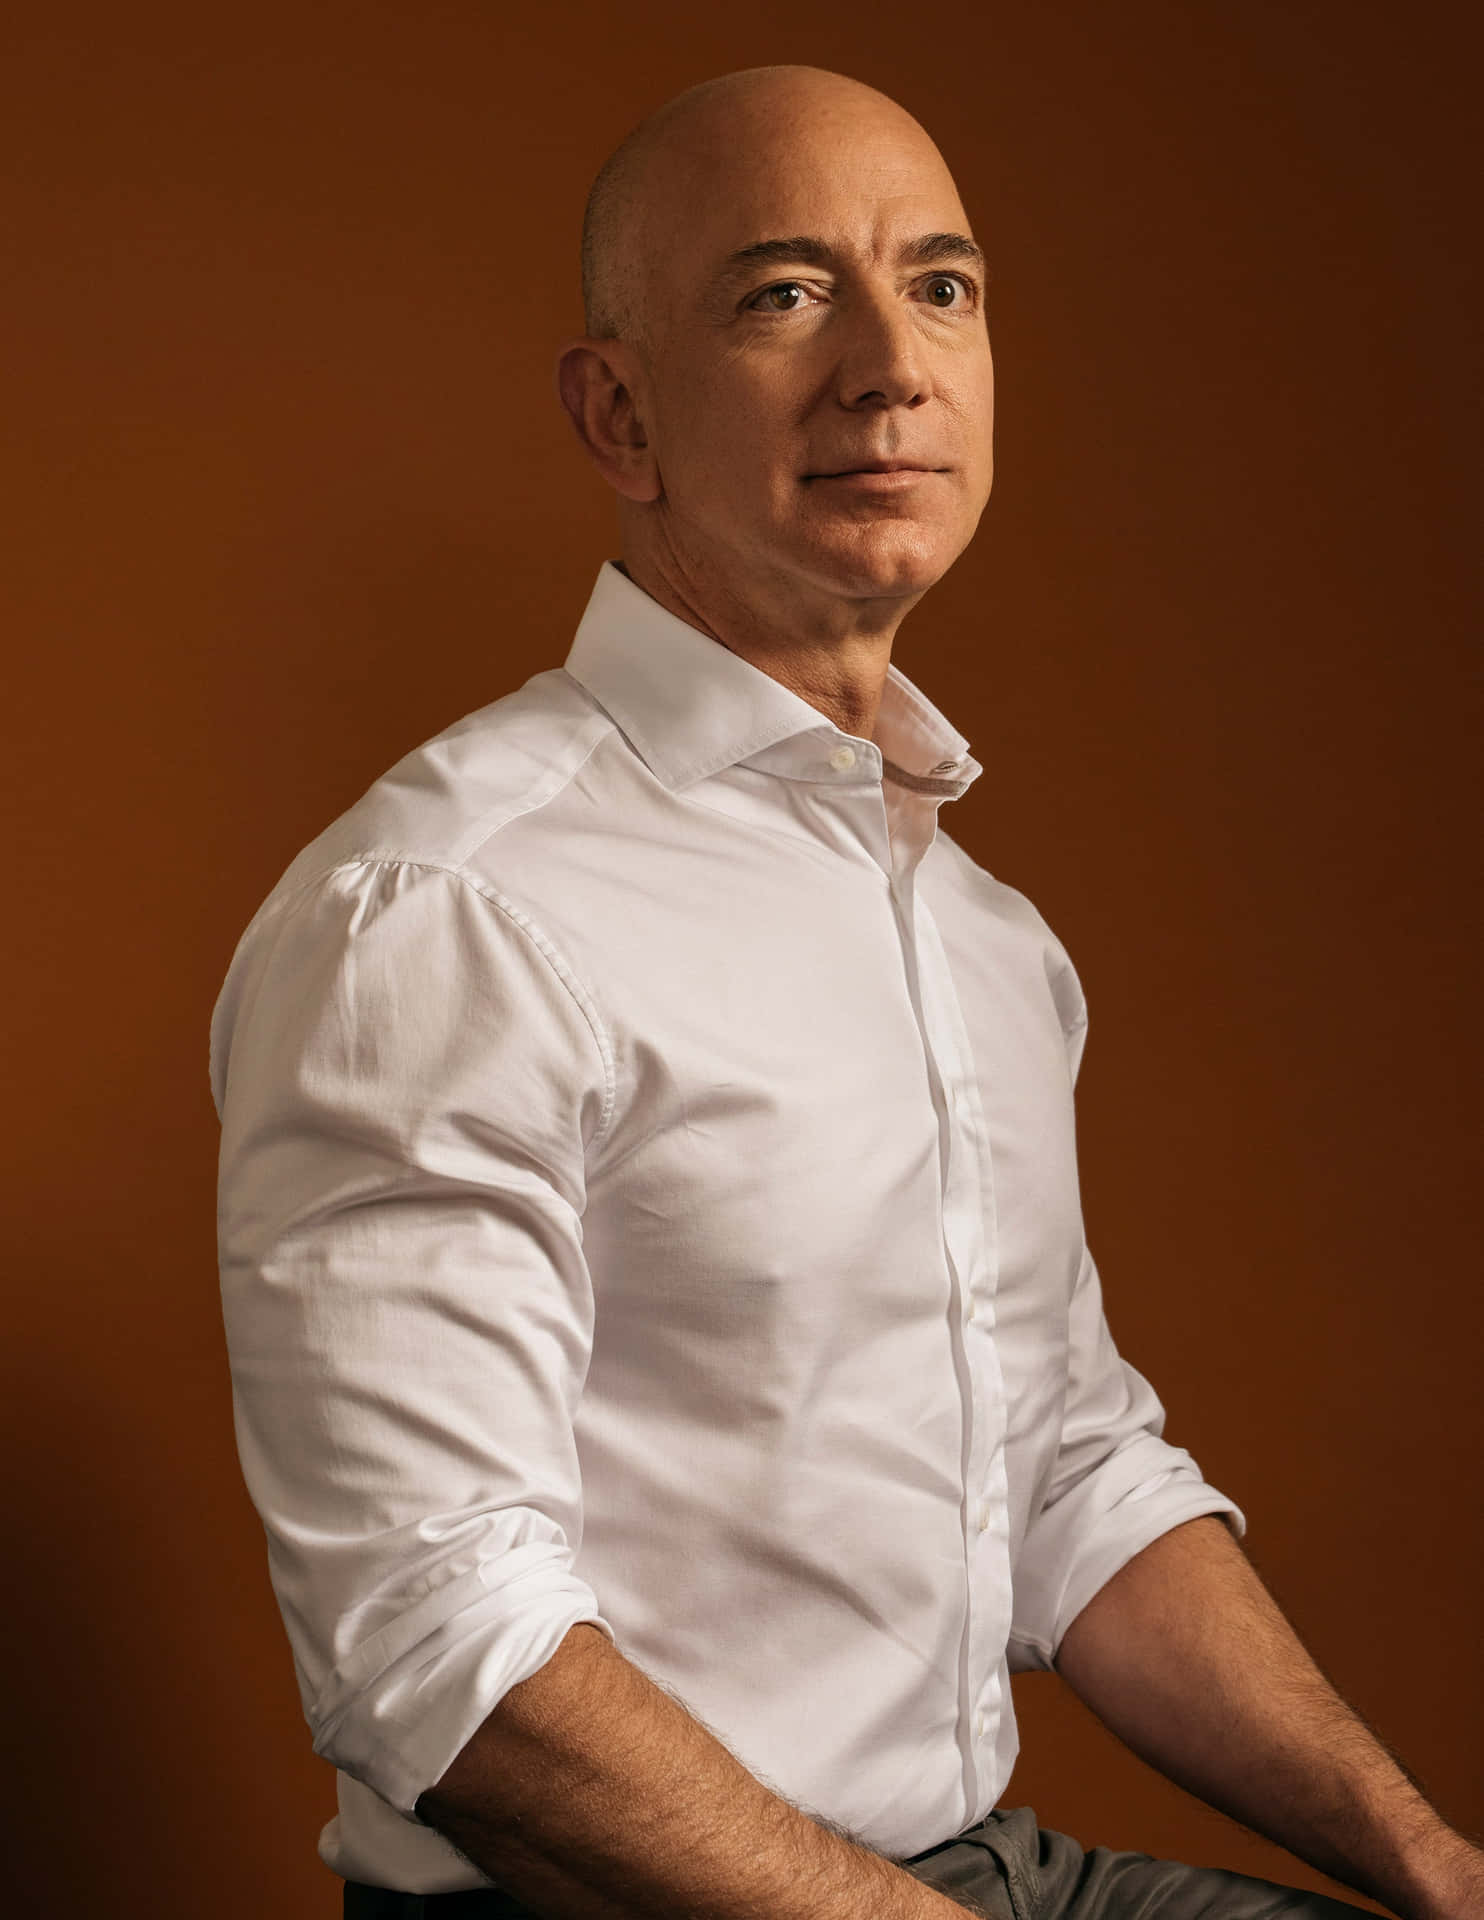 Jeff Bezos, Founder of Amazon